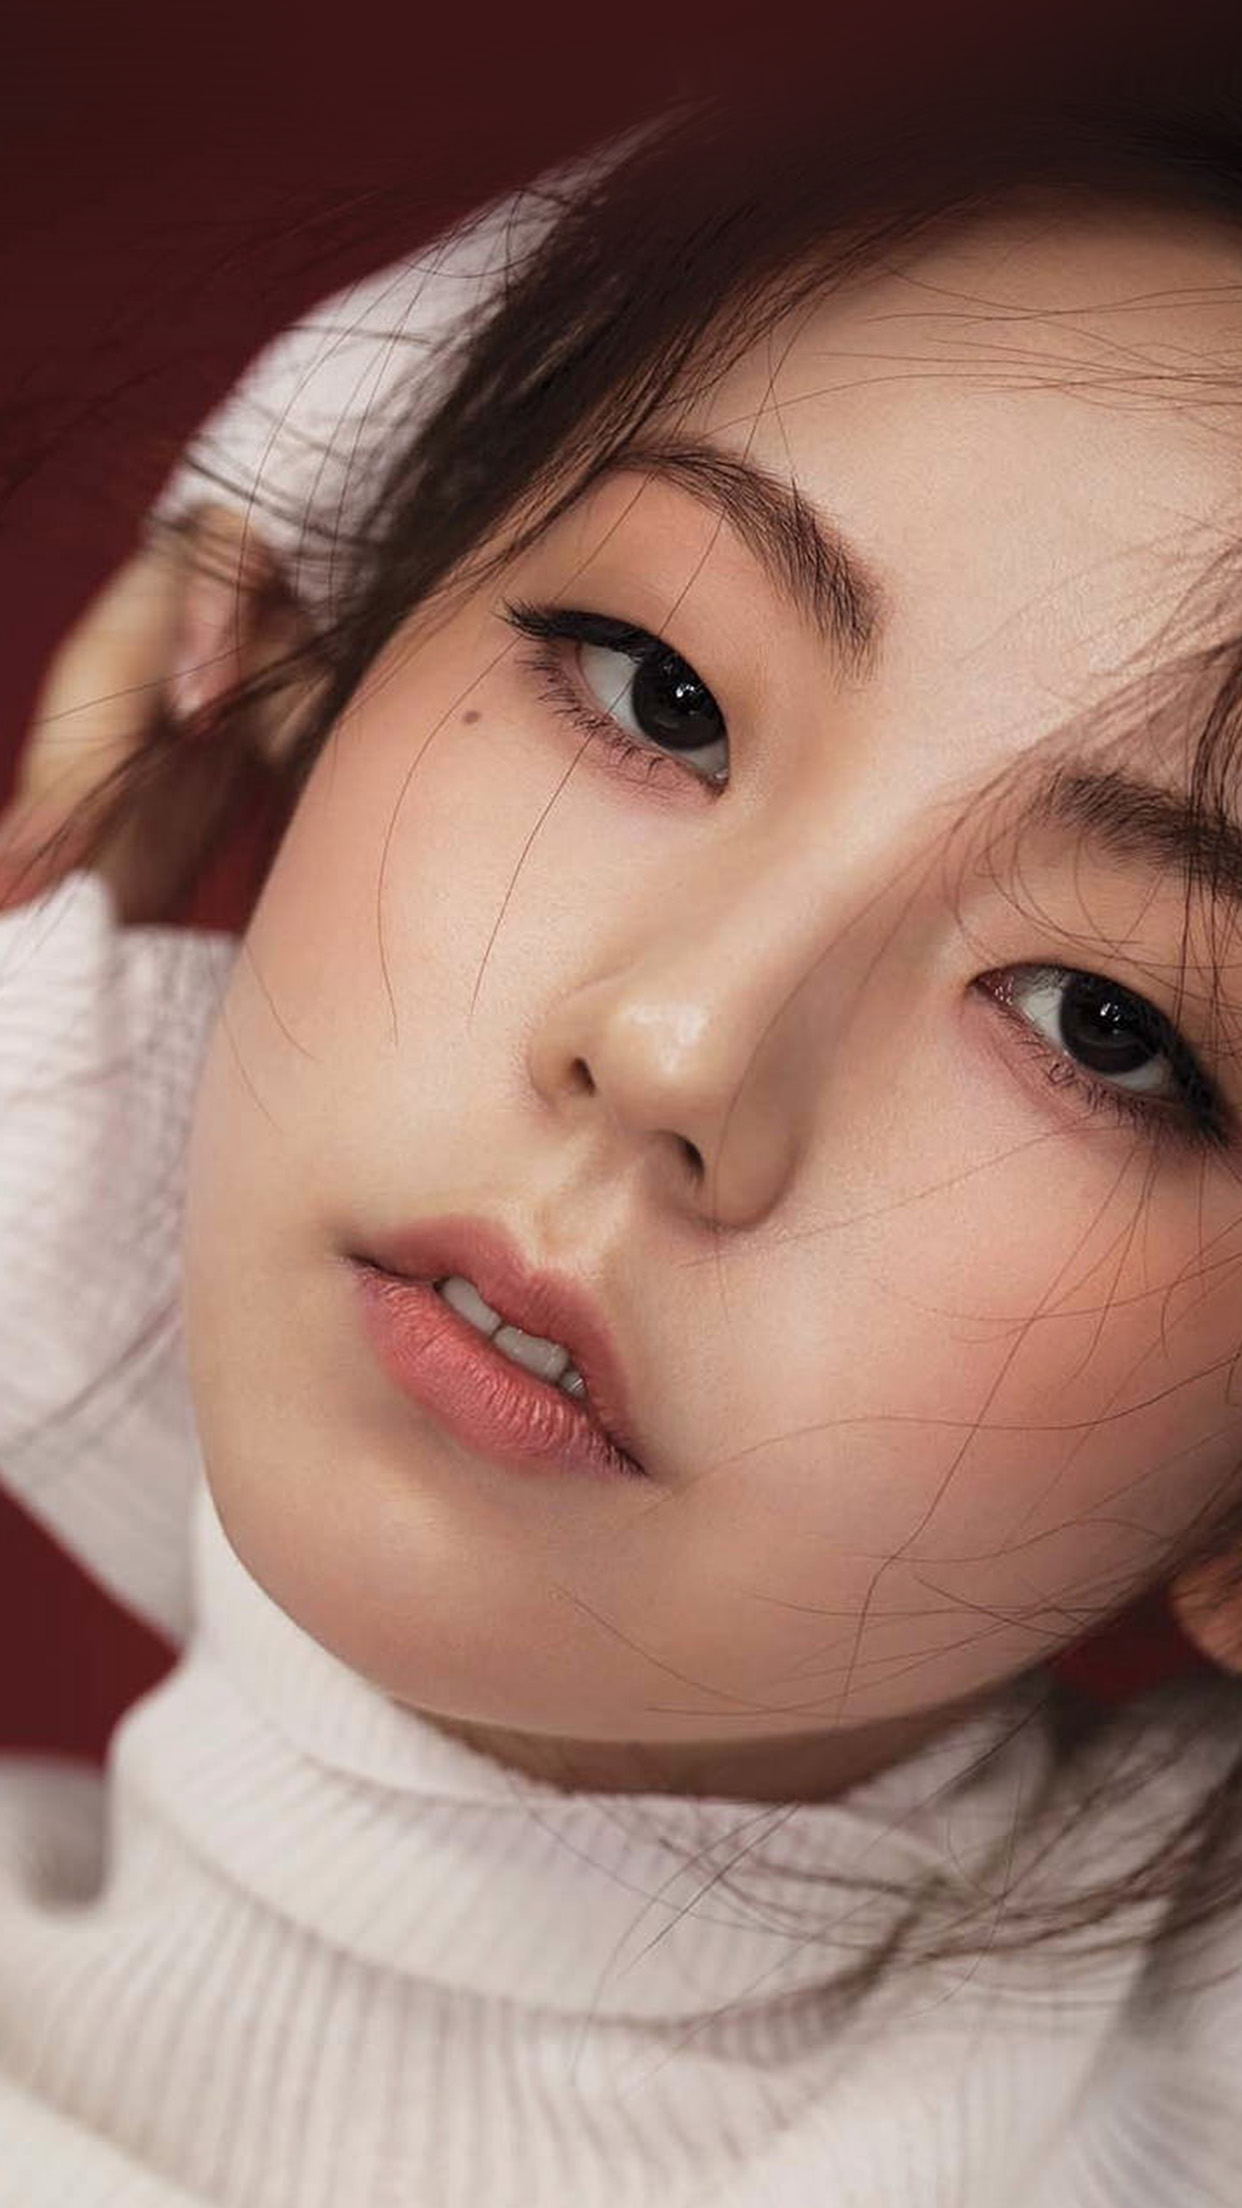 Sohee Kpop Girl Celebrity Face Android wallpaper